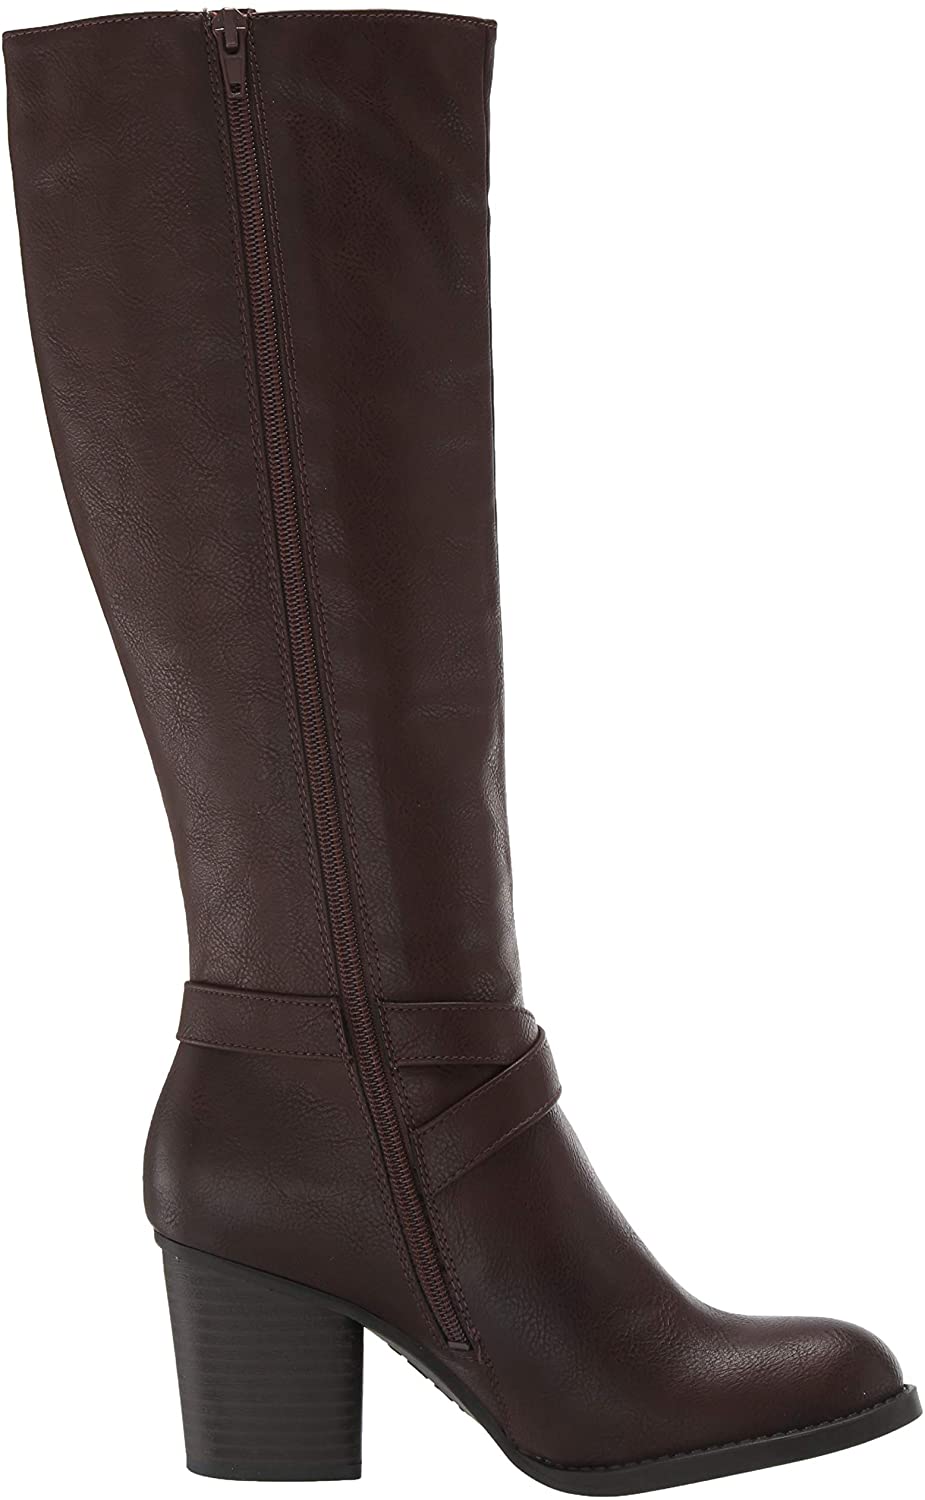 SOUL Naturalizer Women's Timber Knee High Boot, Dark Brown, Size 9.0 ...